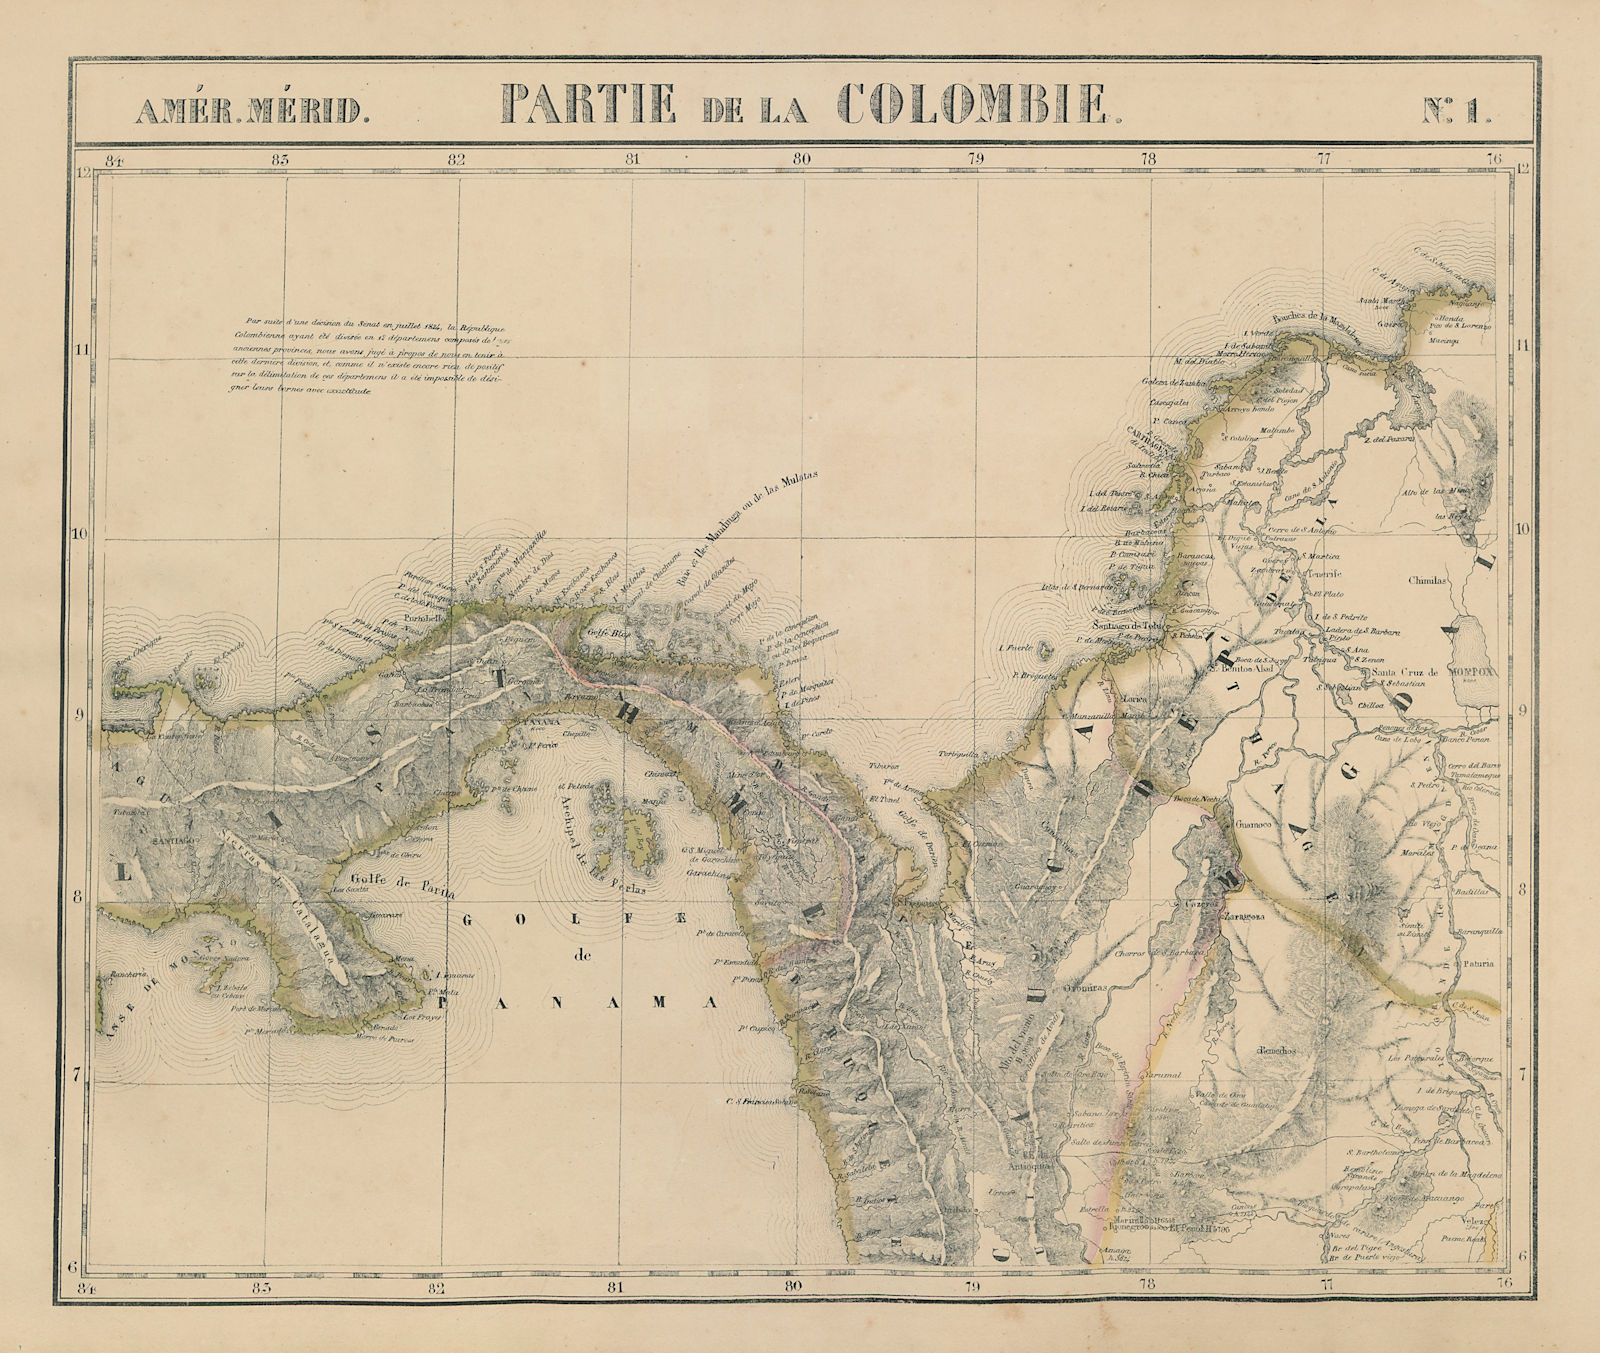 Associate Product Amér. Mér. Colombie #1. Panama & northwestern Colombia. VANDERMAELEN 1827 map